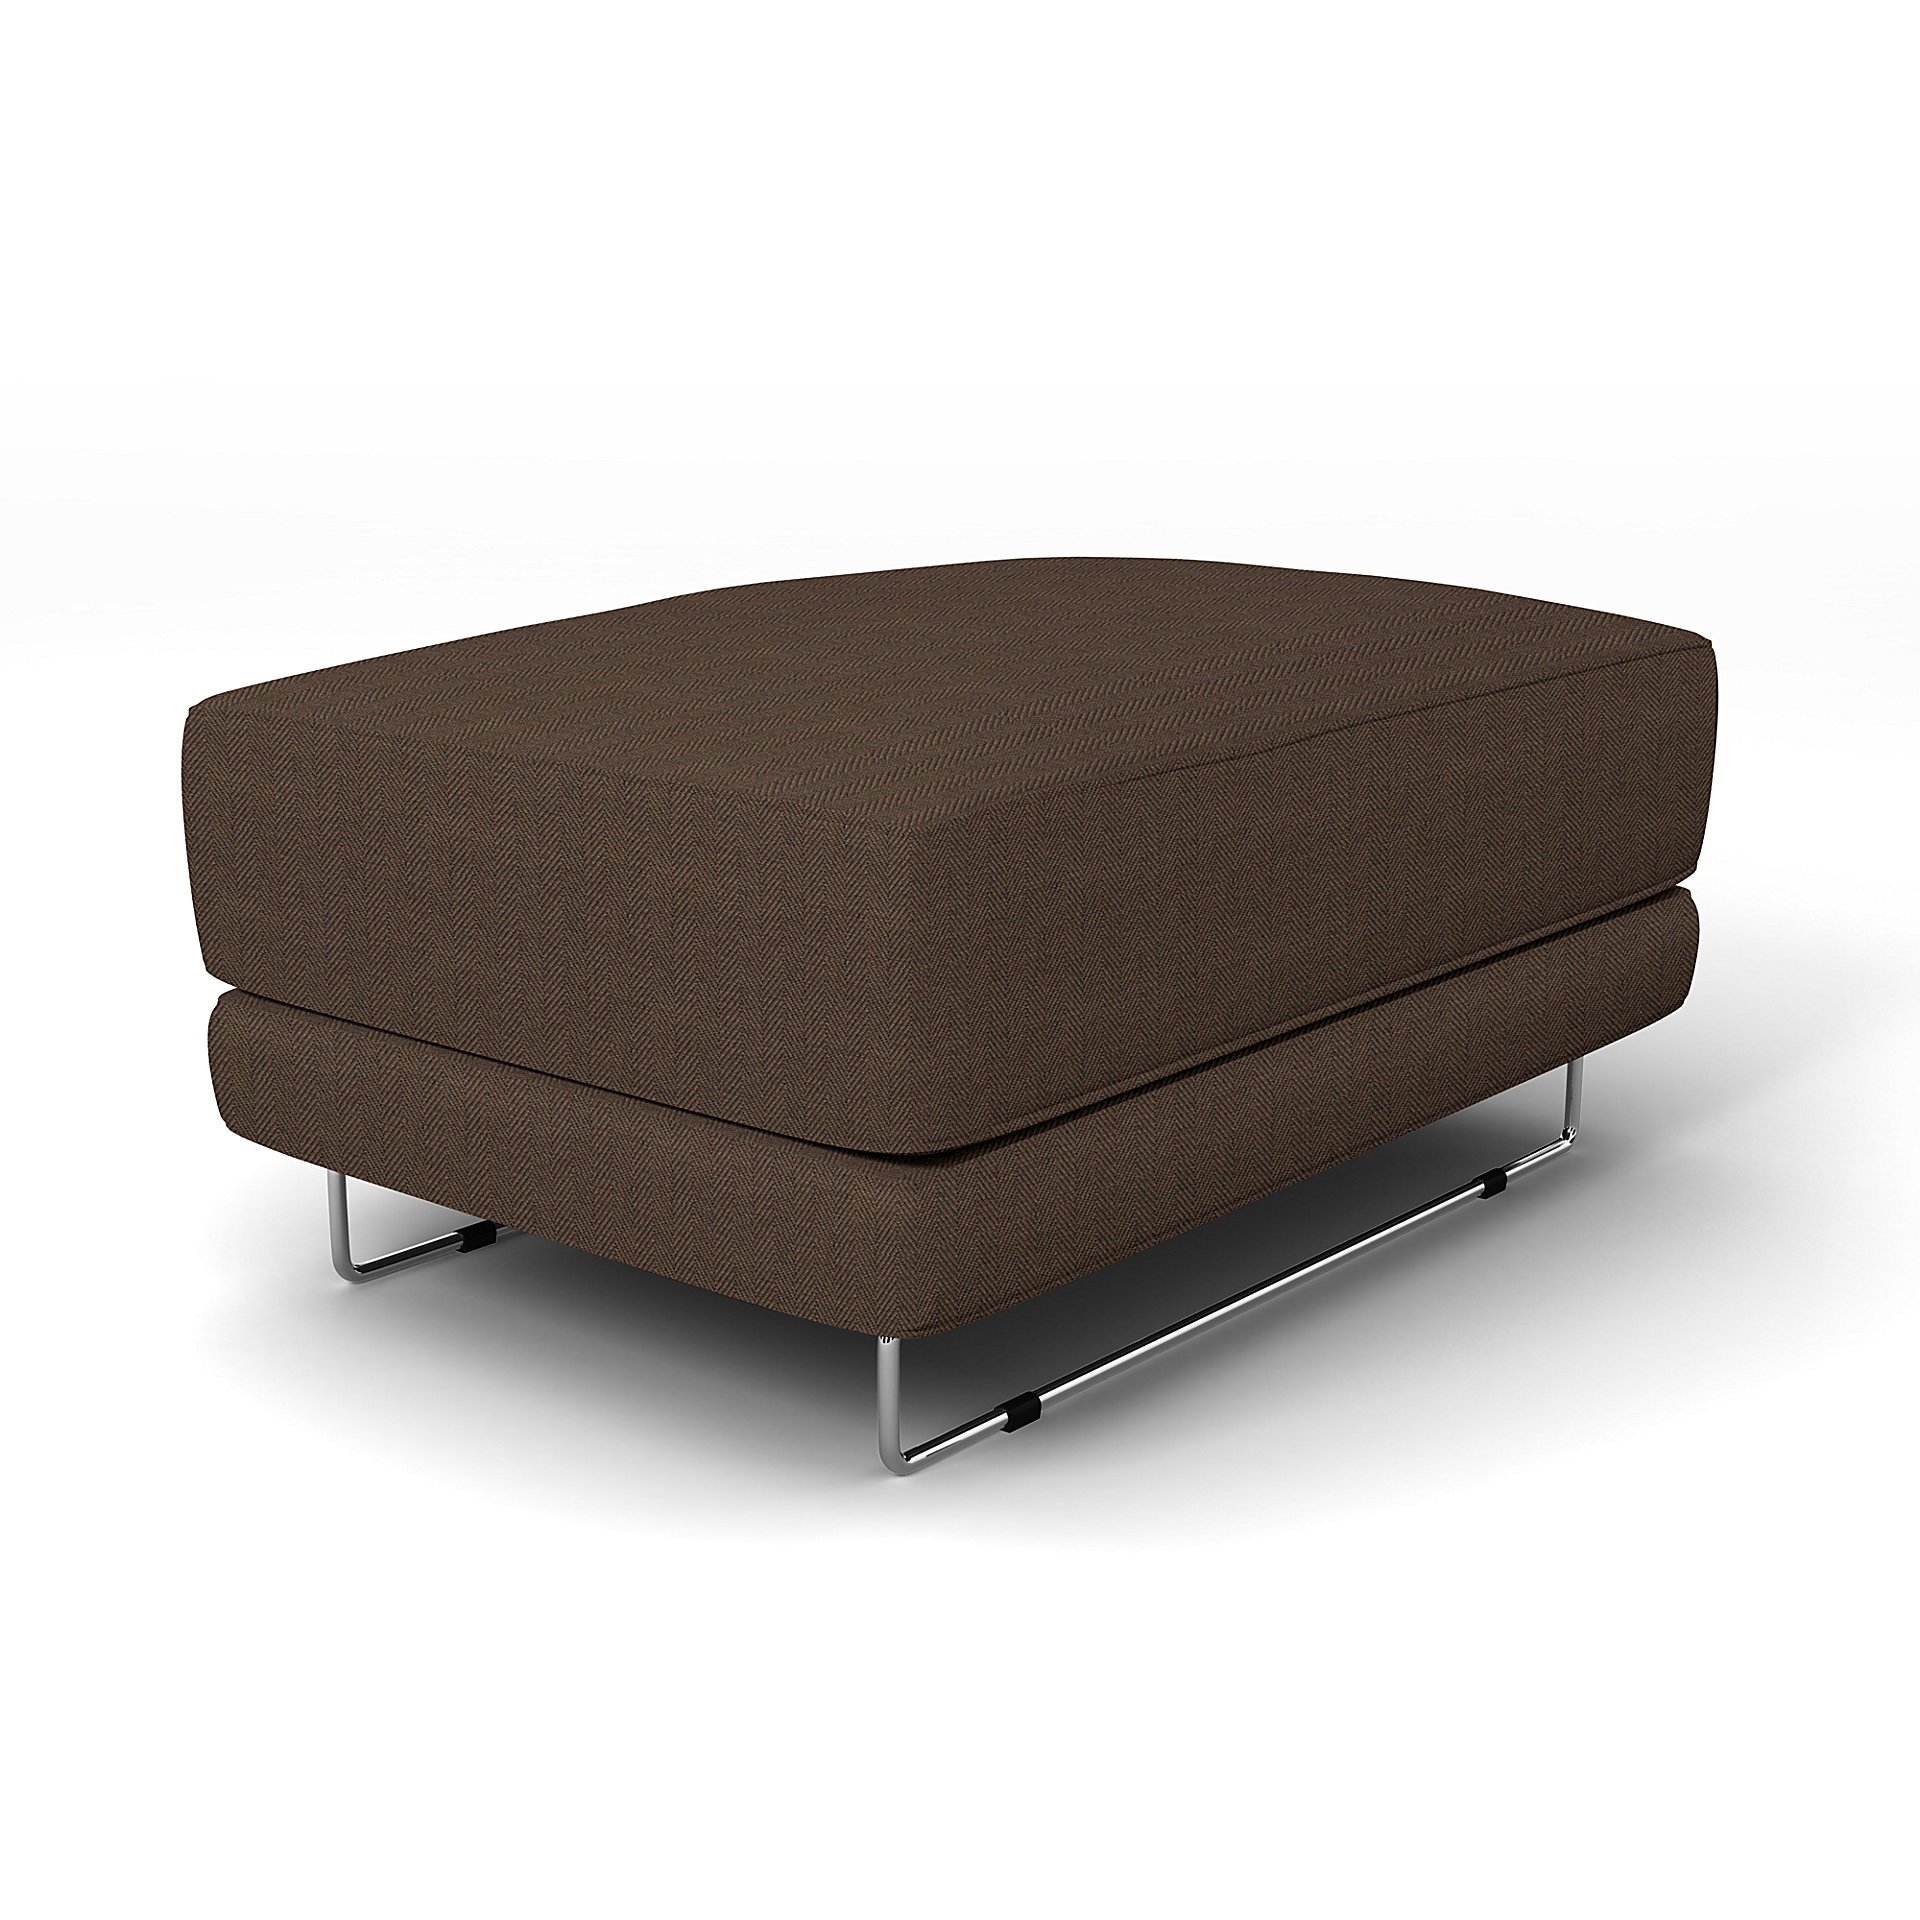 IKEA - Tylosand Footstool Cover, Chocolate, Boucle & Texture - Bemz